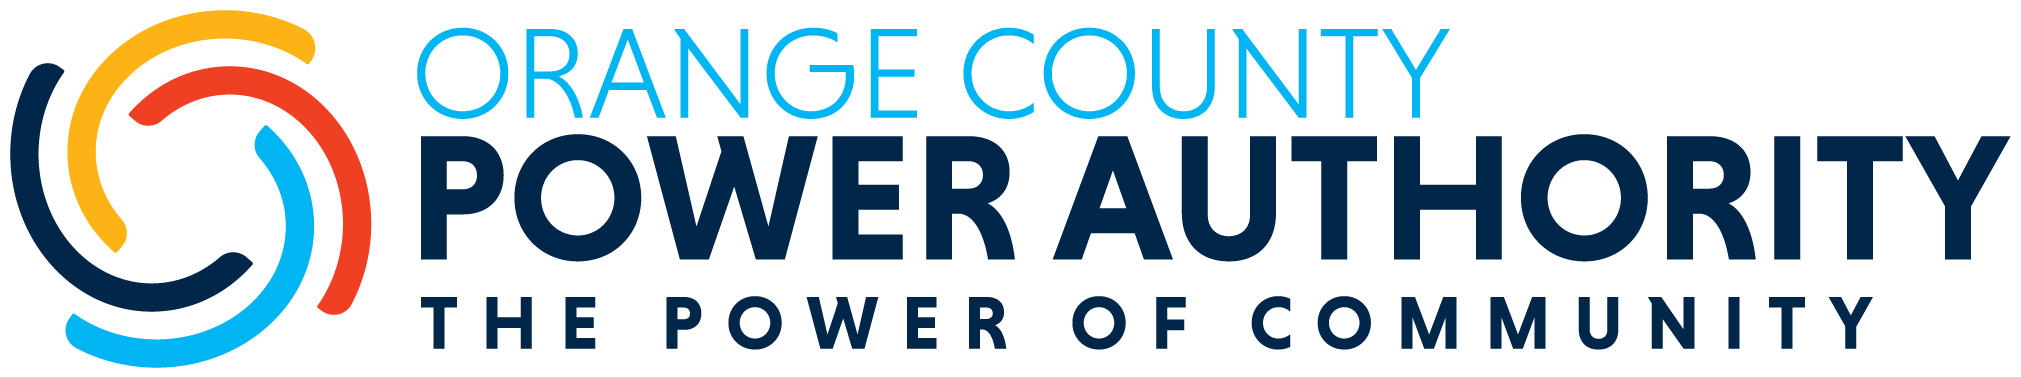 Organization logo of Orange County Power Authority